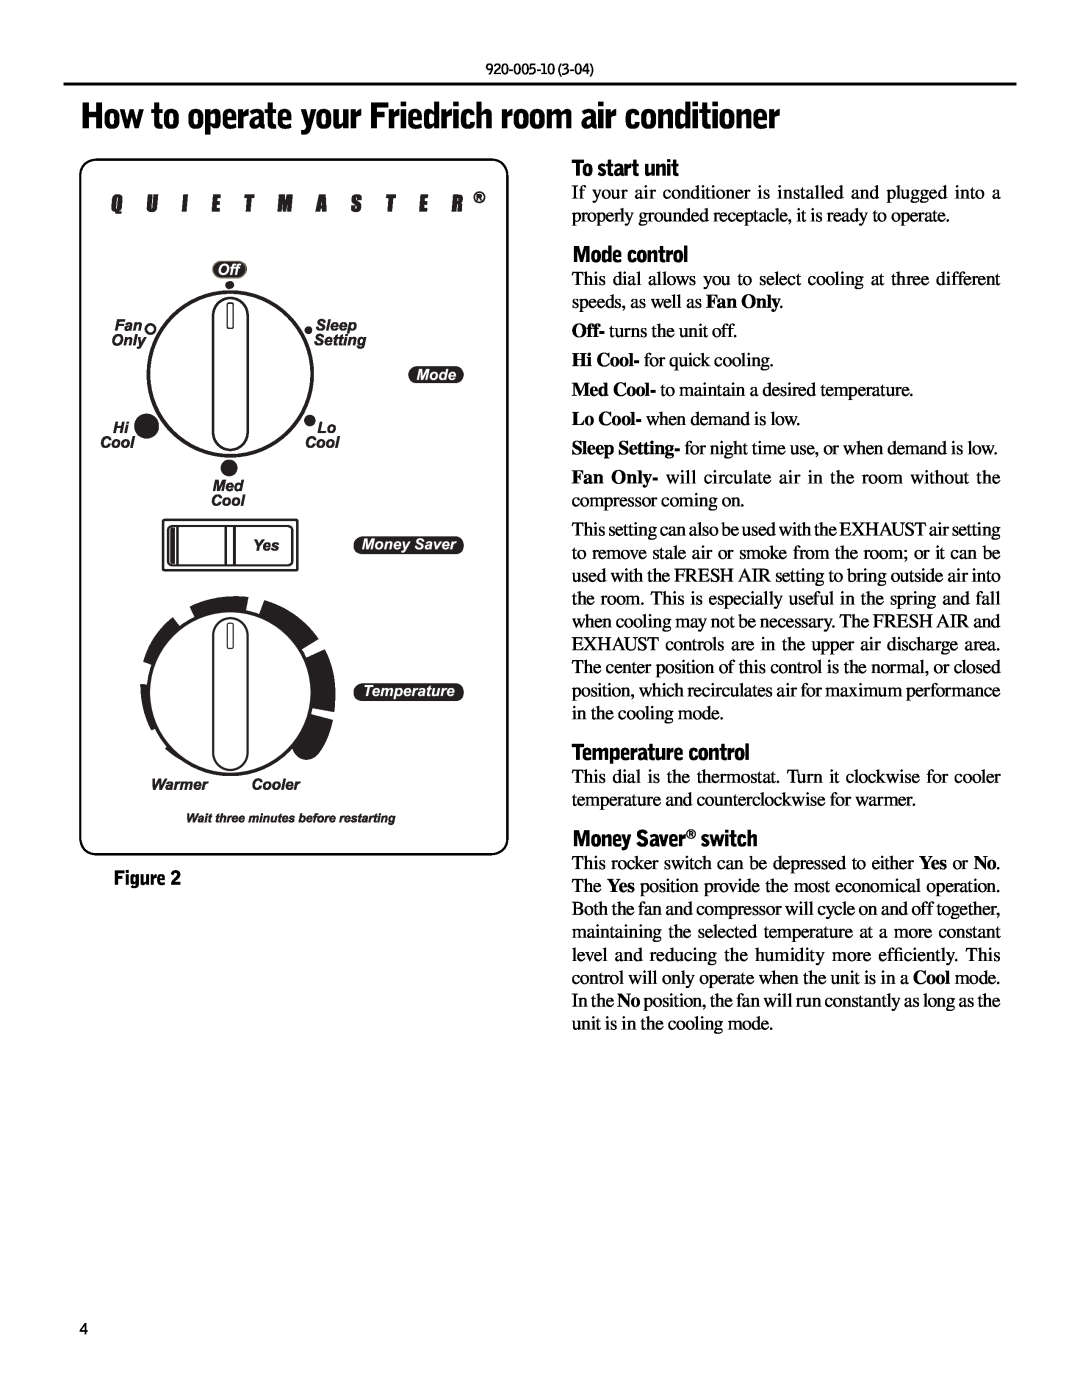 Friedrich KS10, KM20 manual To start unit, Mode control, Temperature control, Money Saver switch 